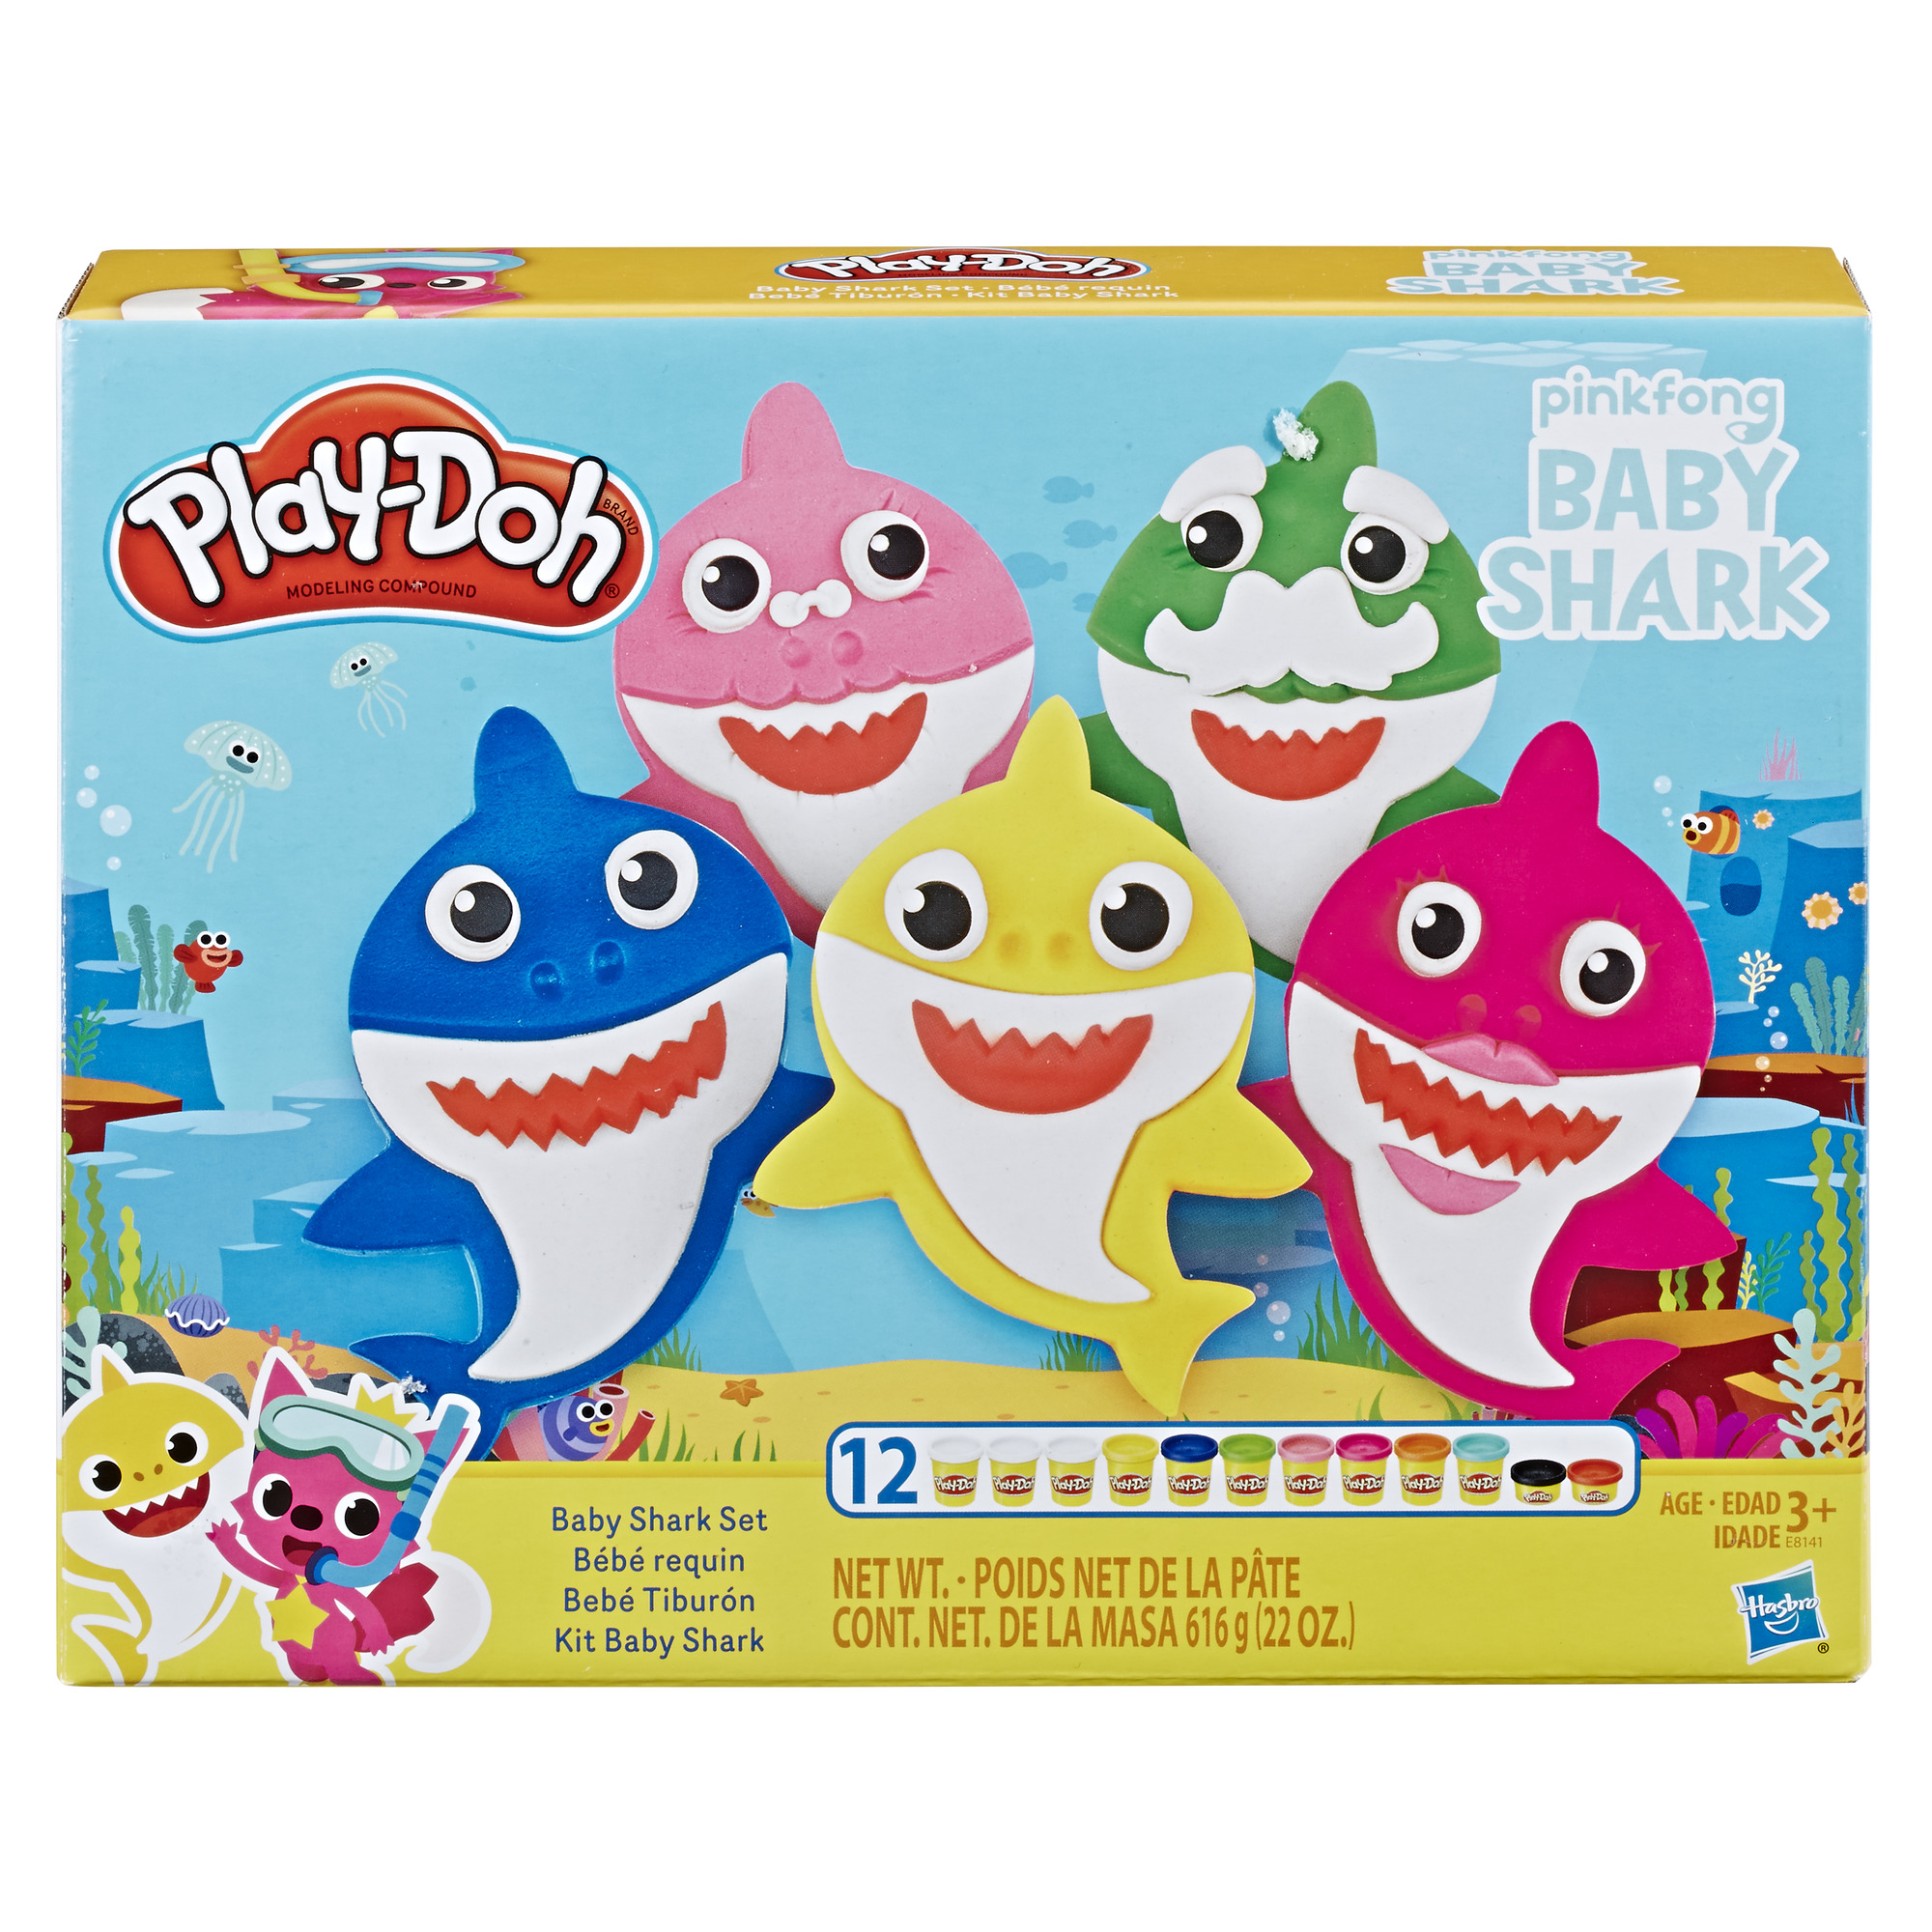 Play-Doh Pinkfong Baby Shark S...